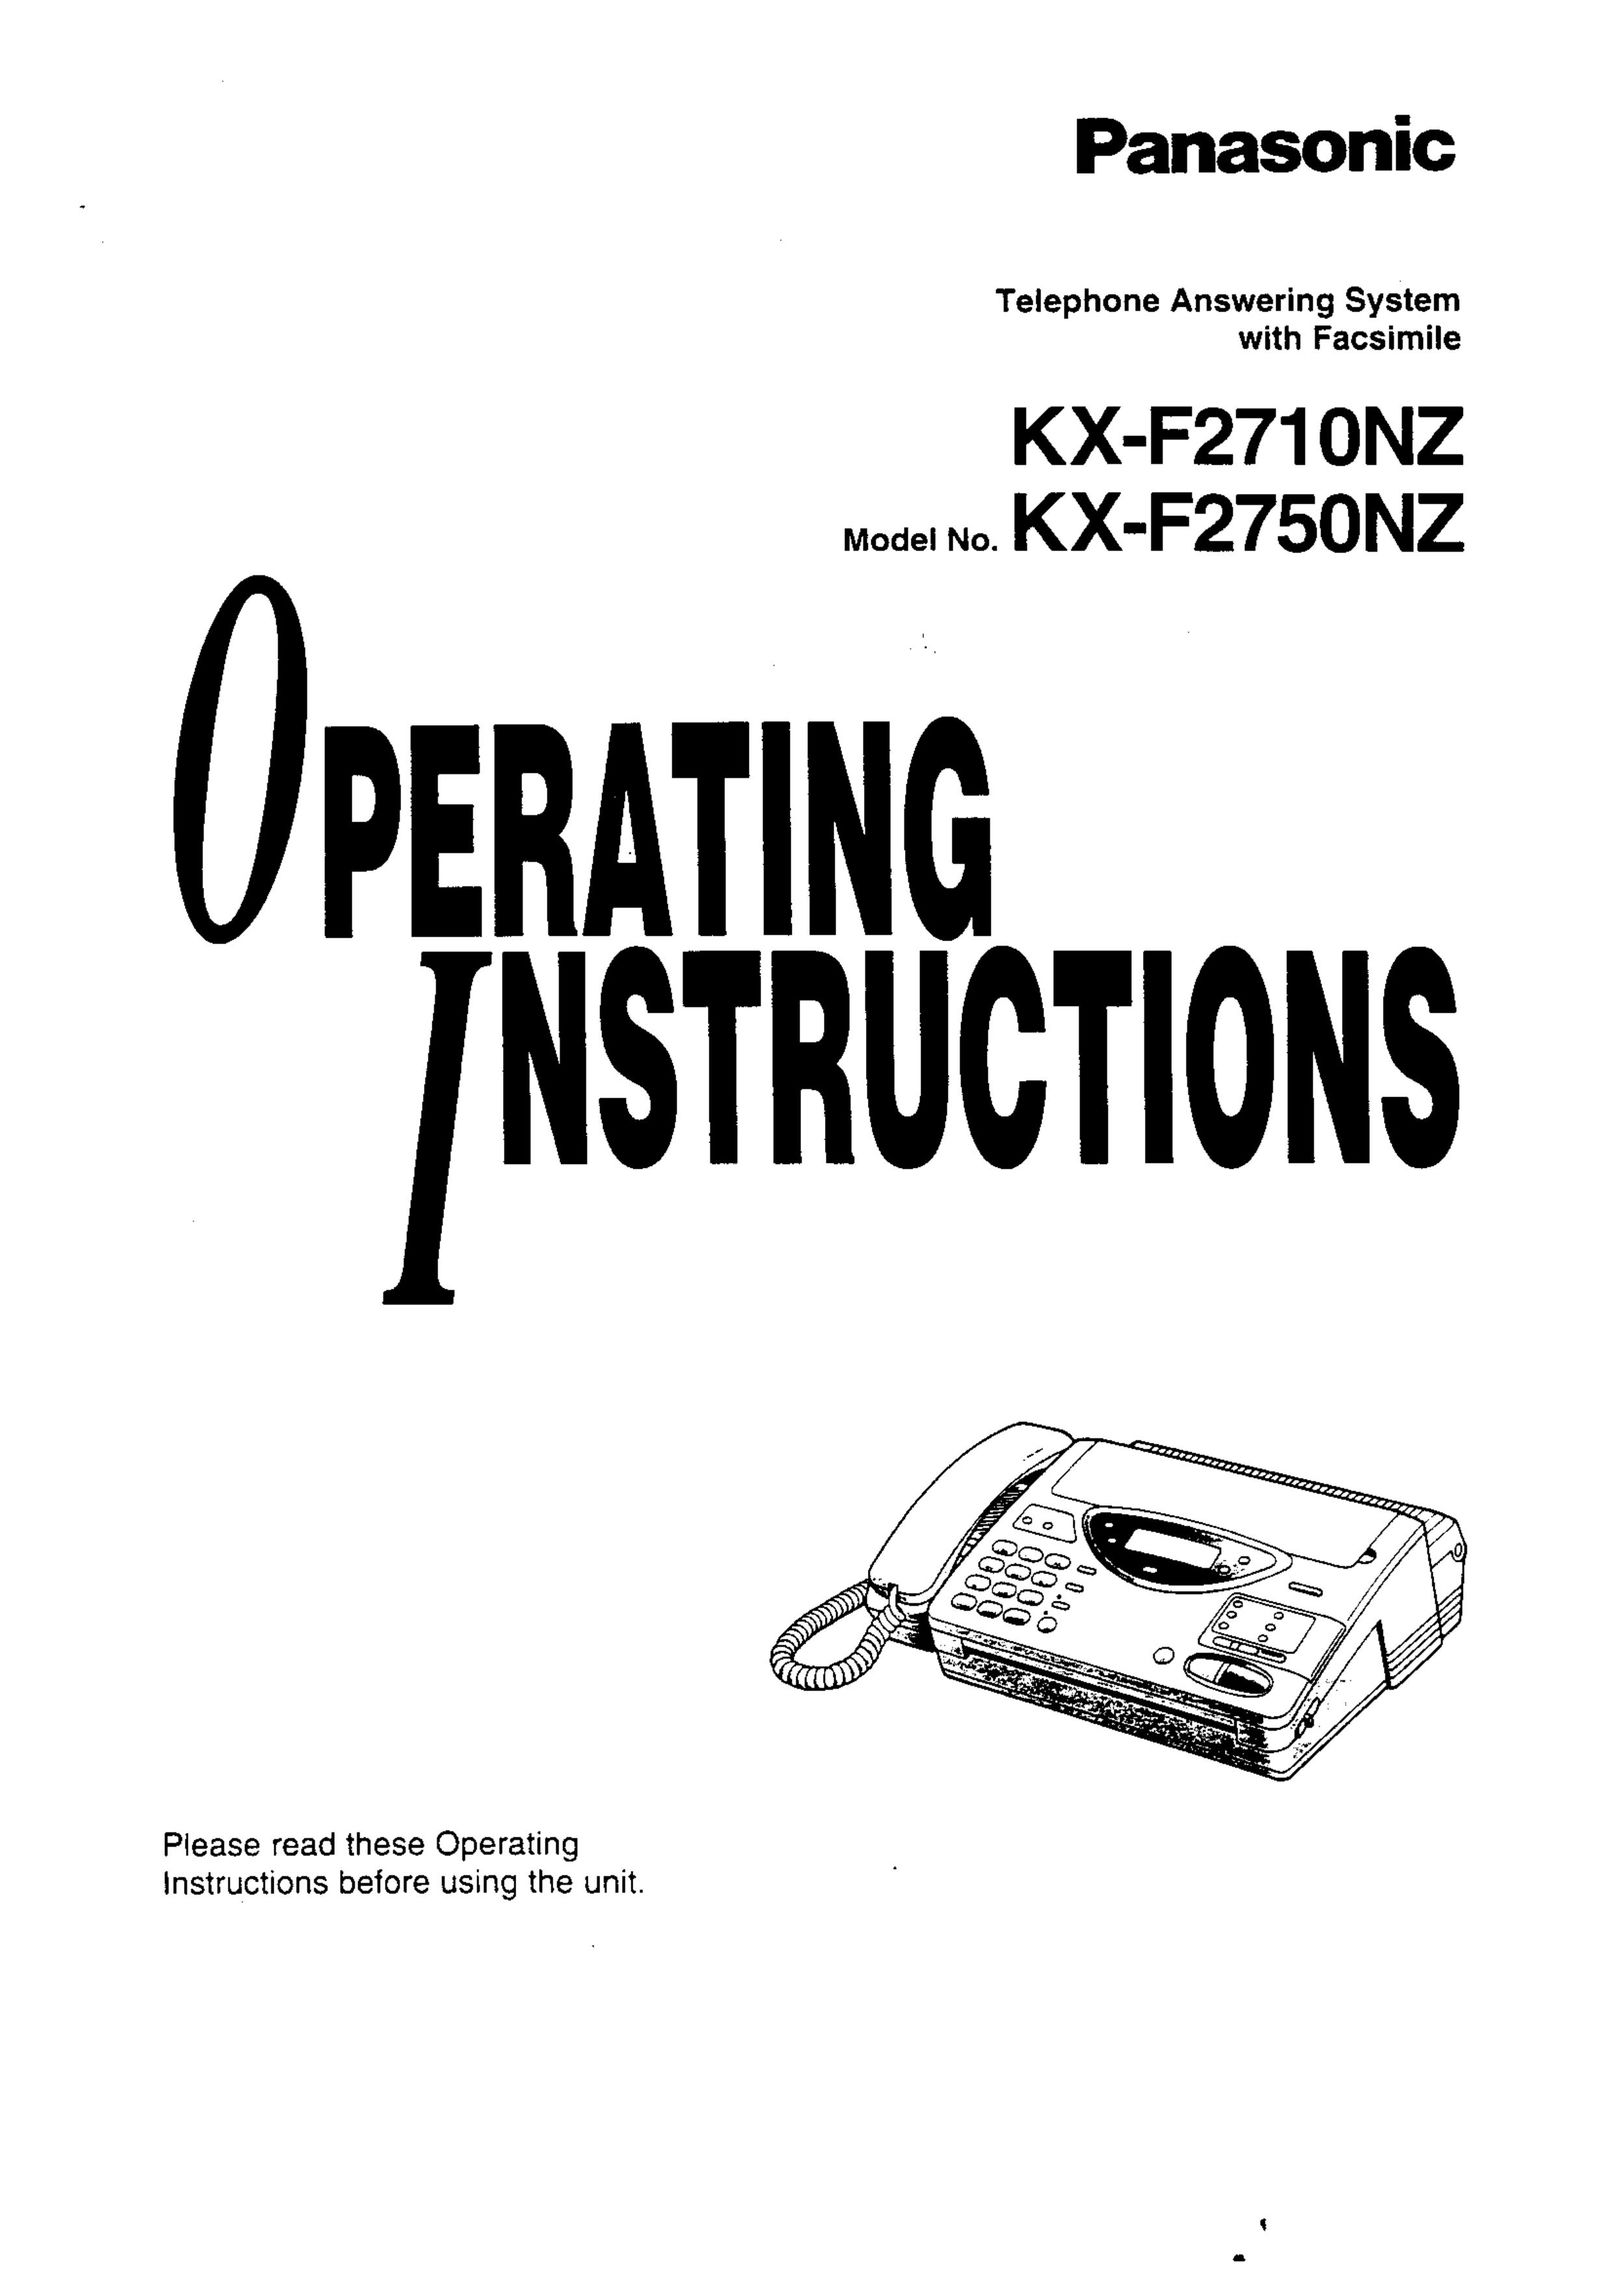 Panasonic KX-F2710NZ Answering Machine User Manual